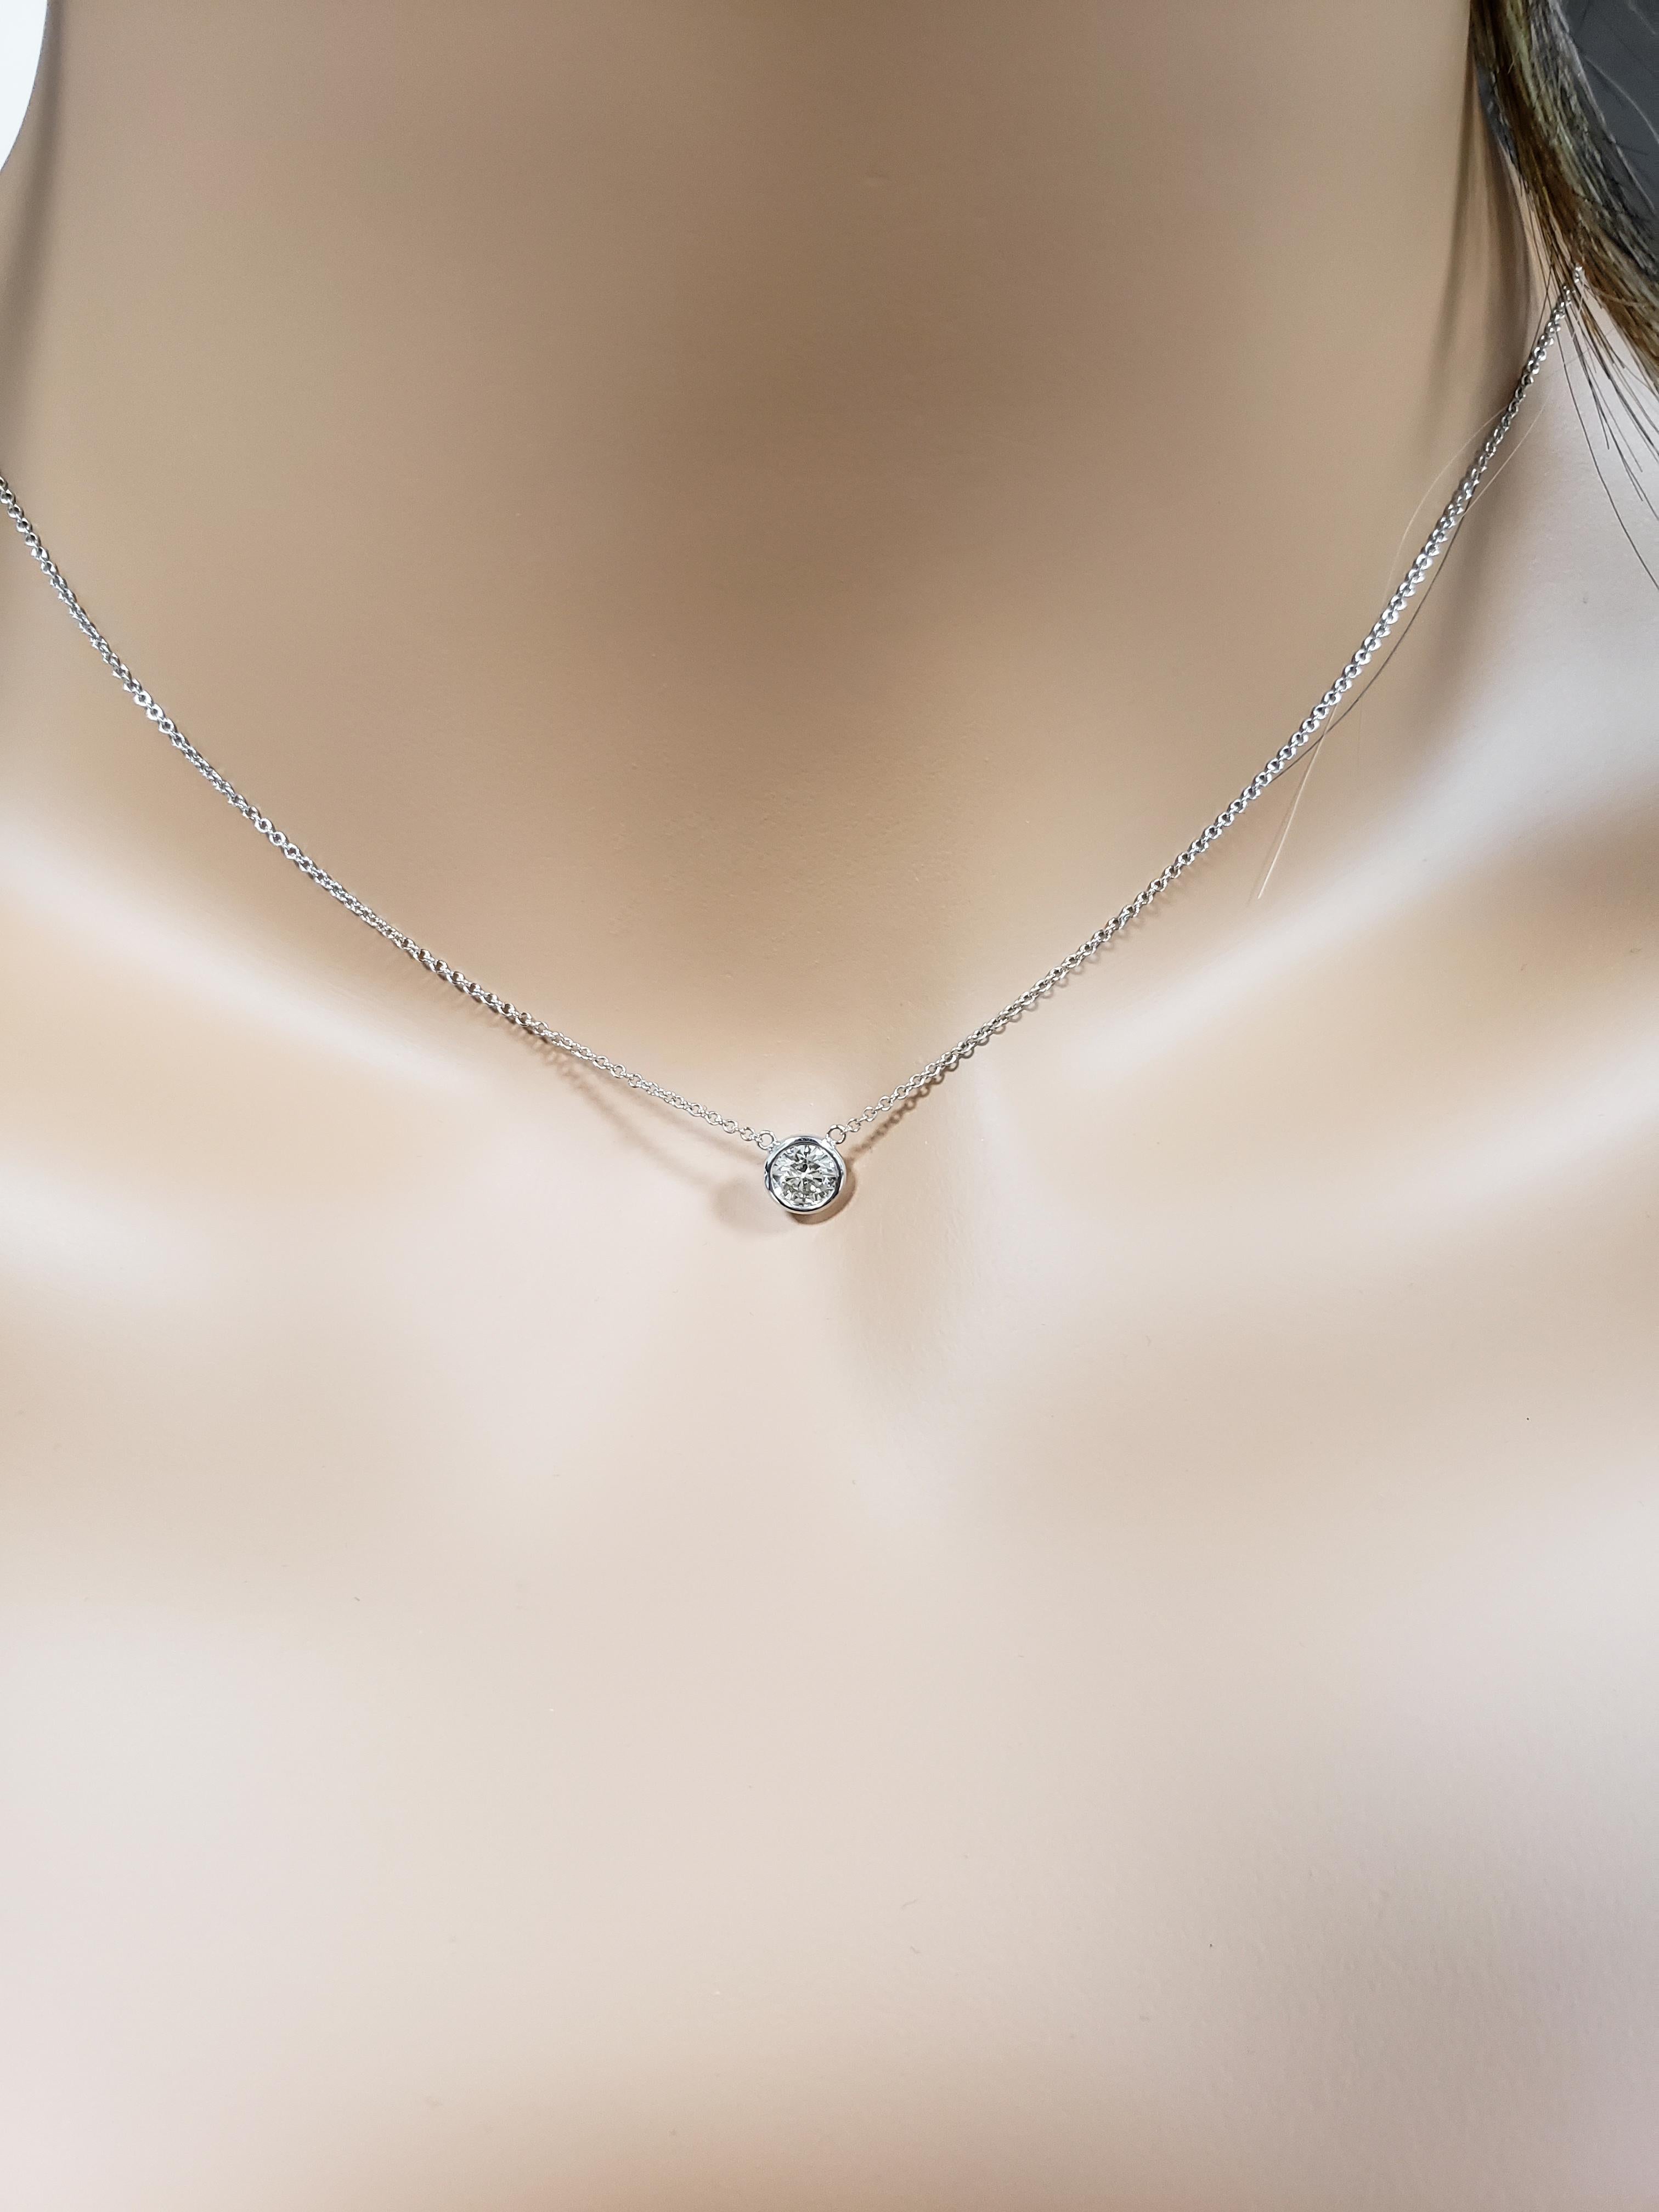 Contemporary Roman Malakov, 0.51 Carat Round Diamond Bezel Solitaire Pendant Necklace For Sale